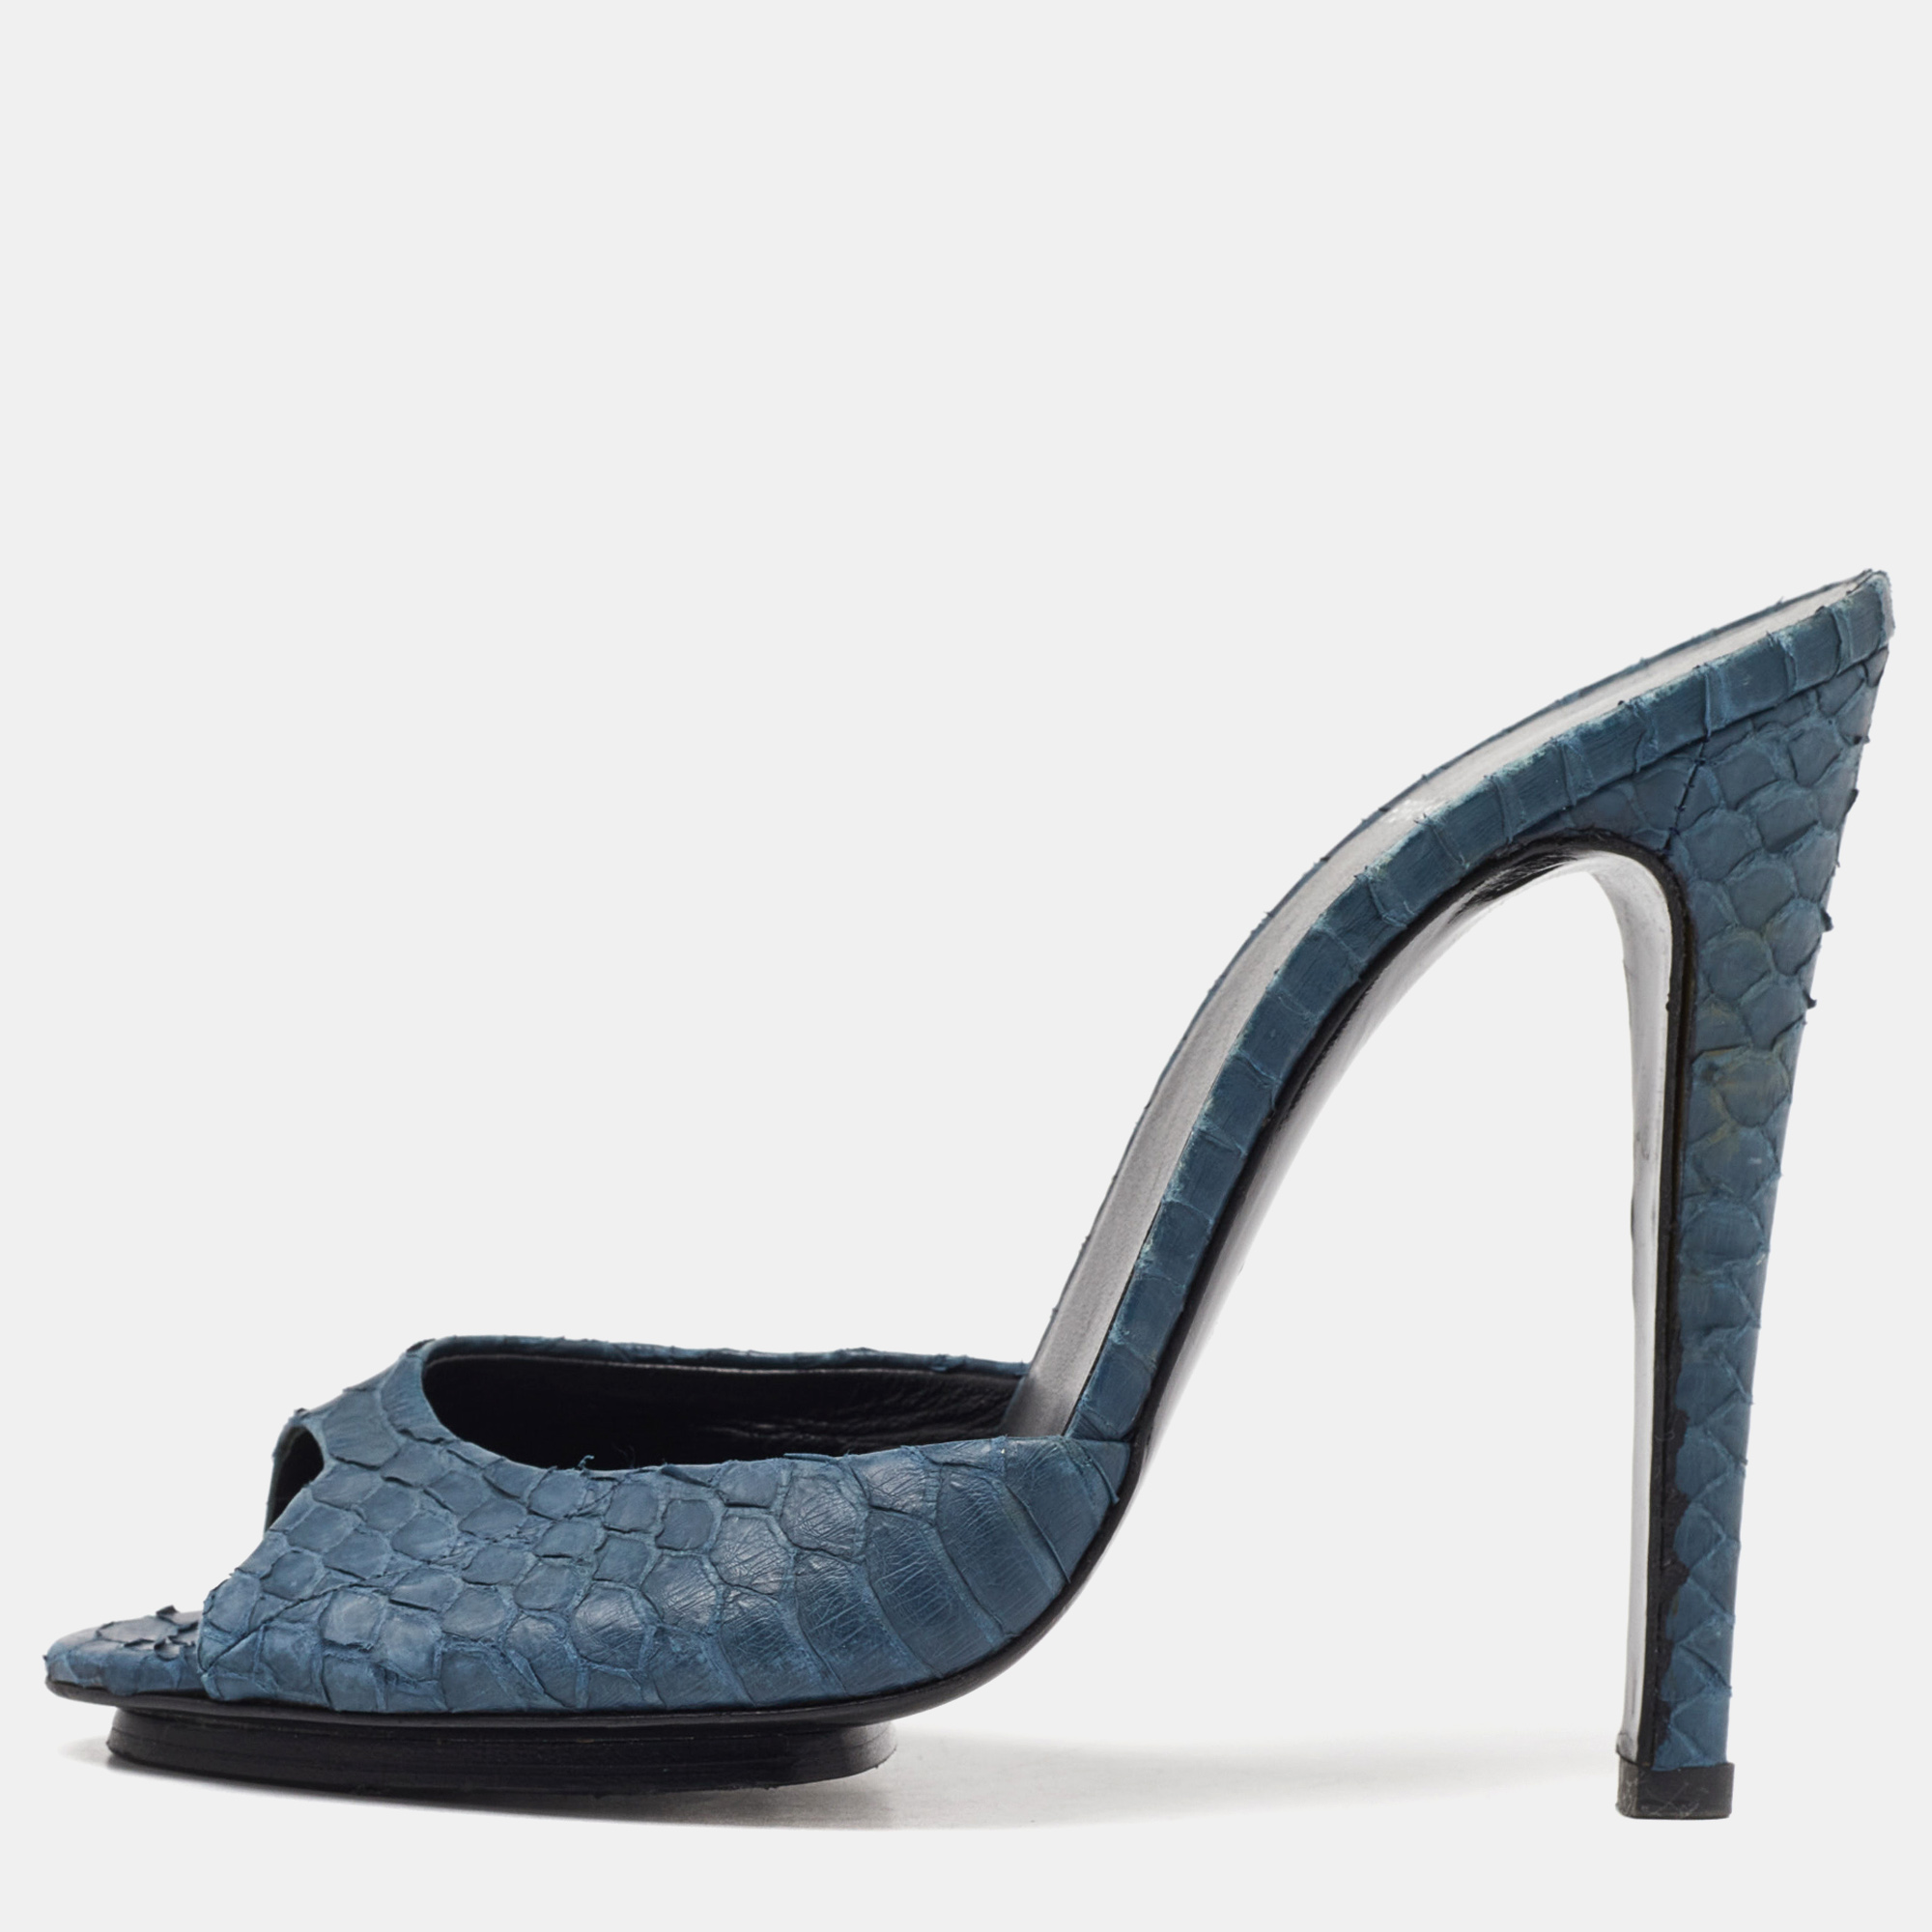 Pierre hardy navy blue python leather open toe slide sandals size 38